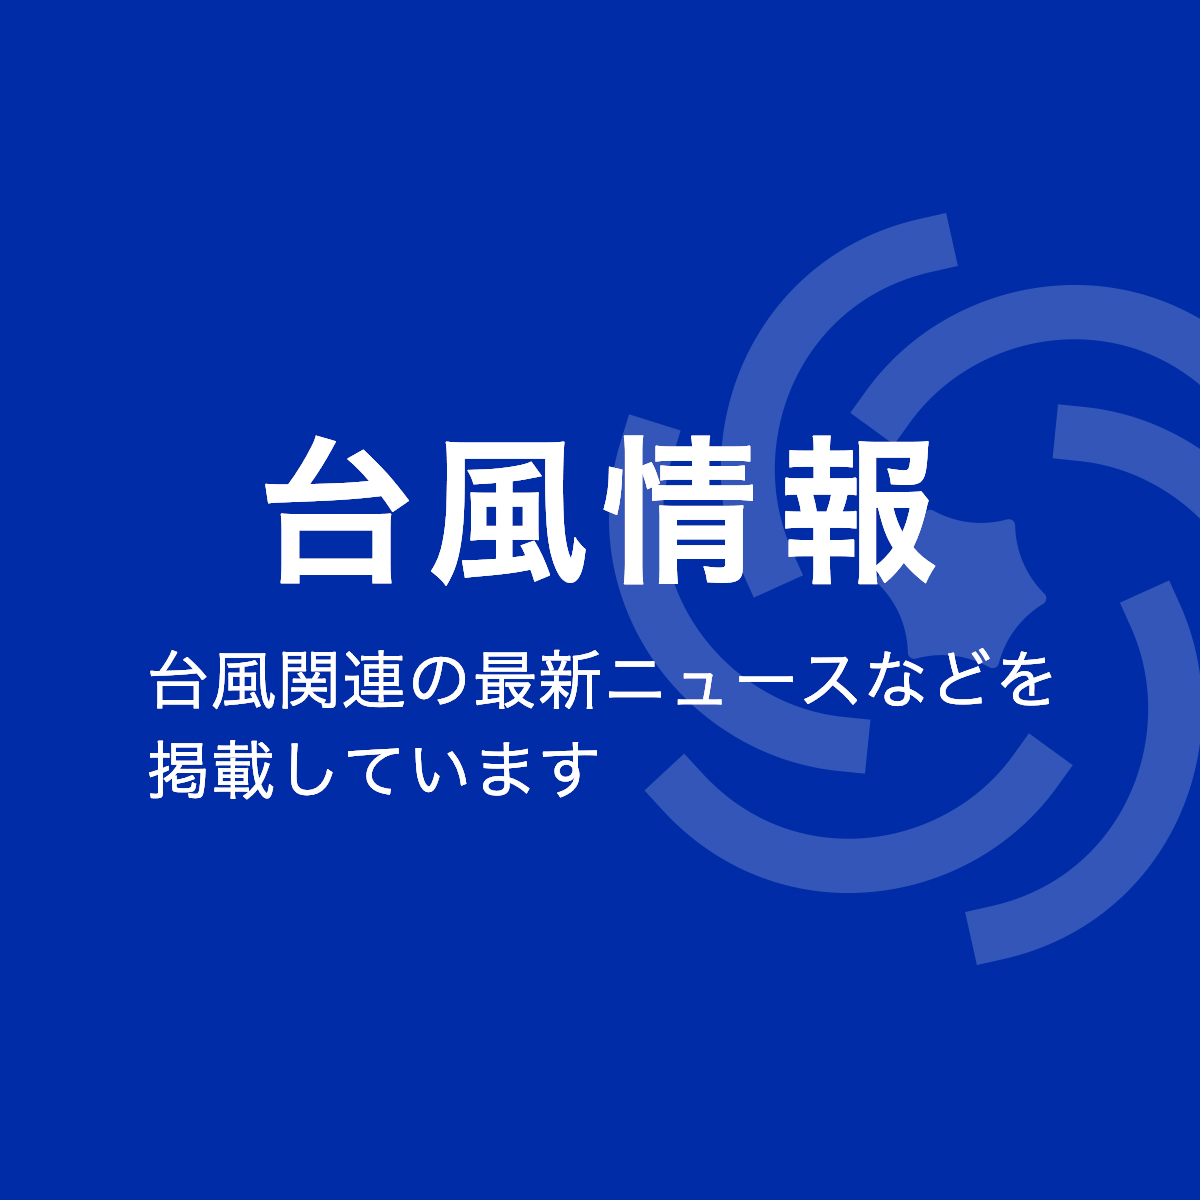 【NHK】台風の予想進路や位置情報などをまとめて掲載しています。